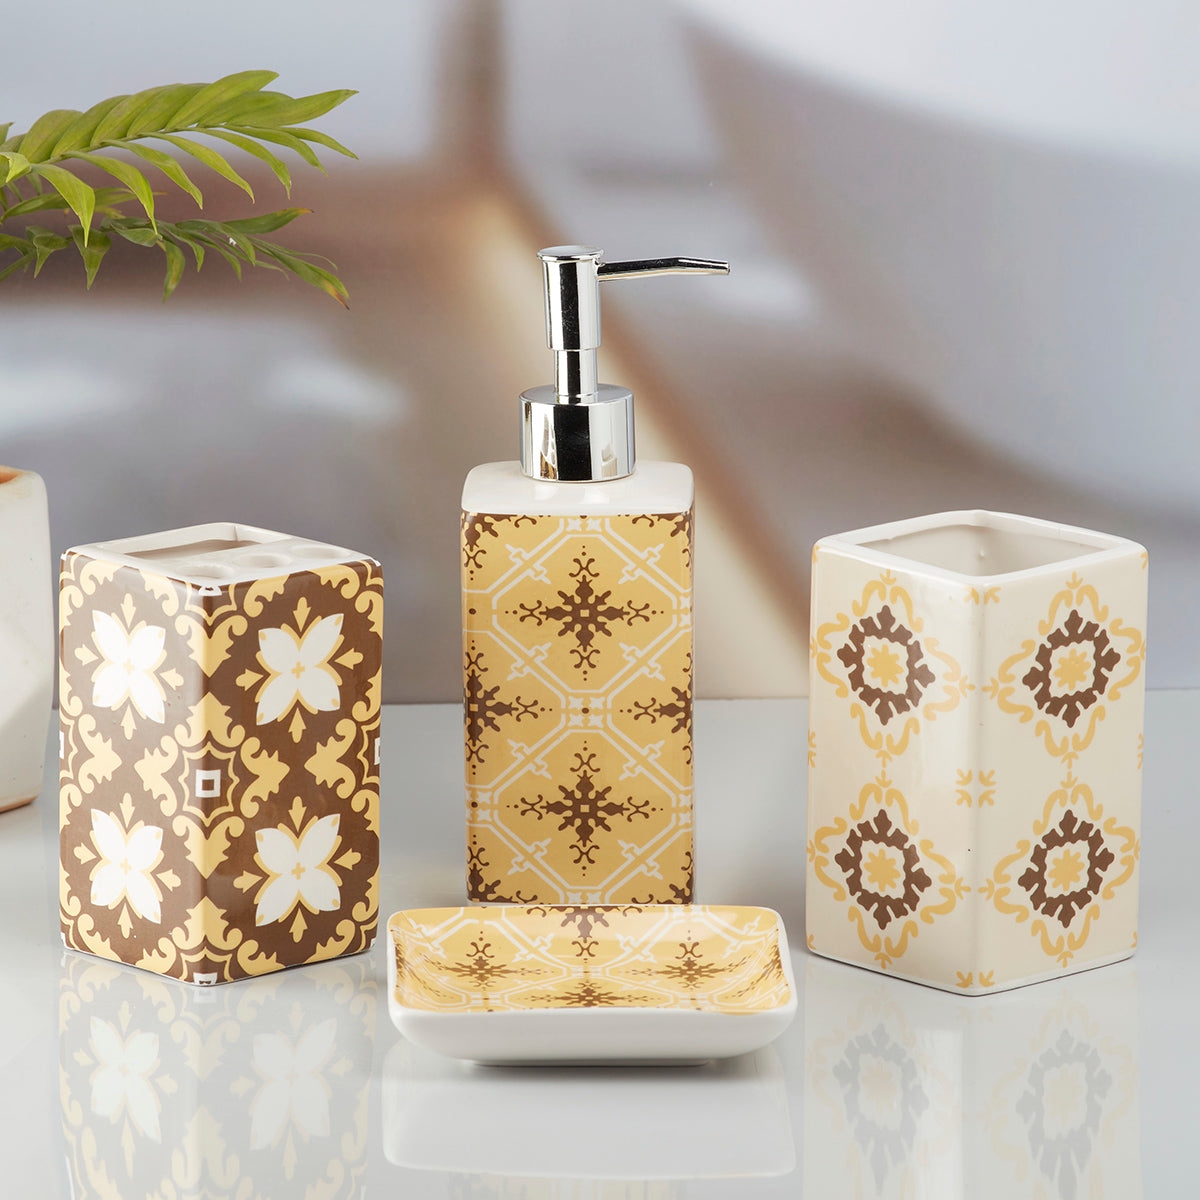 Ceramic Bathroom Accessories Set of 4 Bath Set with Soap Dispenser (10176)